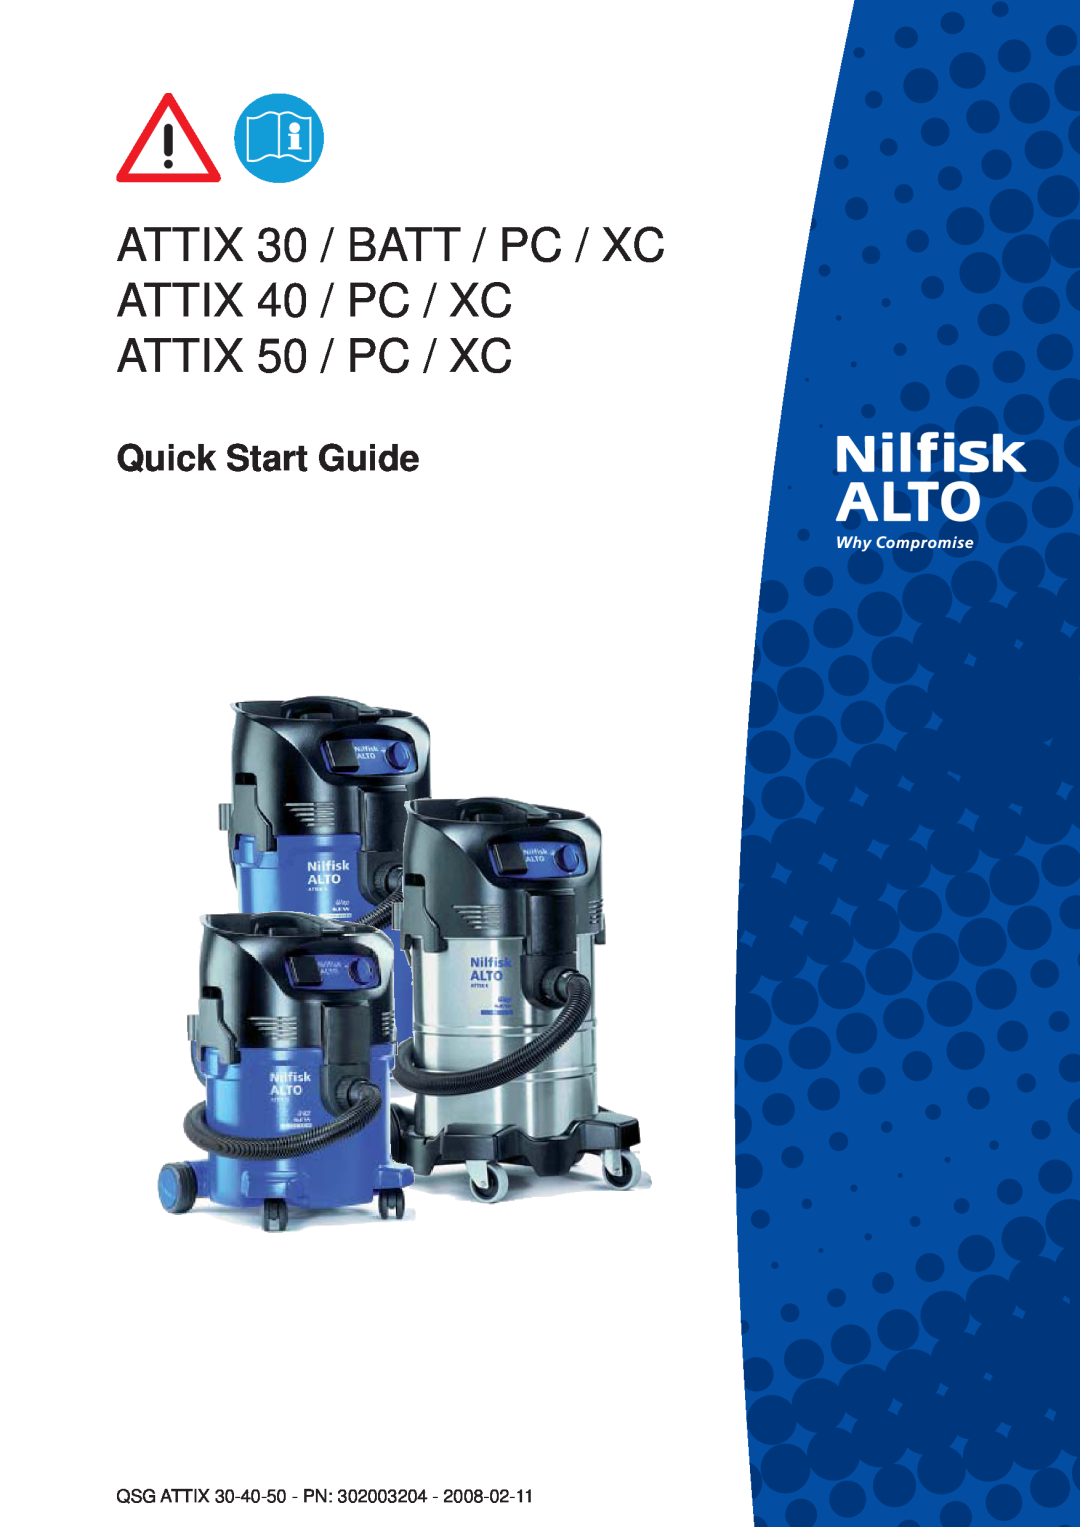 Nilfisk-ALTO ATTIX 50/PC/XC, 30/BATT/PC/XC, ATTIX 40/PC/XC quick start Quick Start Guide, QSG ATTIX 30-40-50- PN 